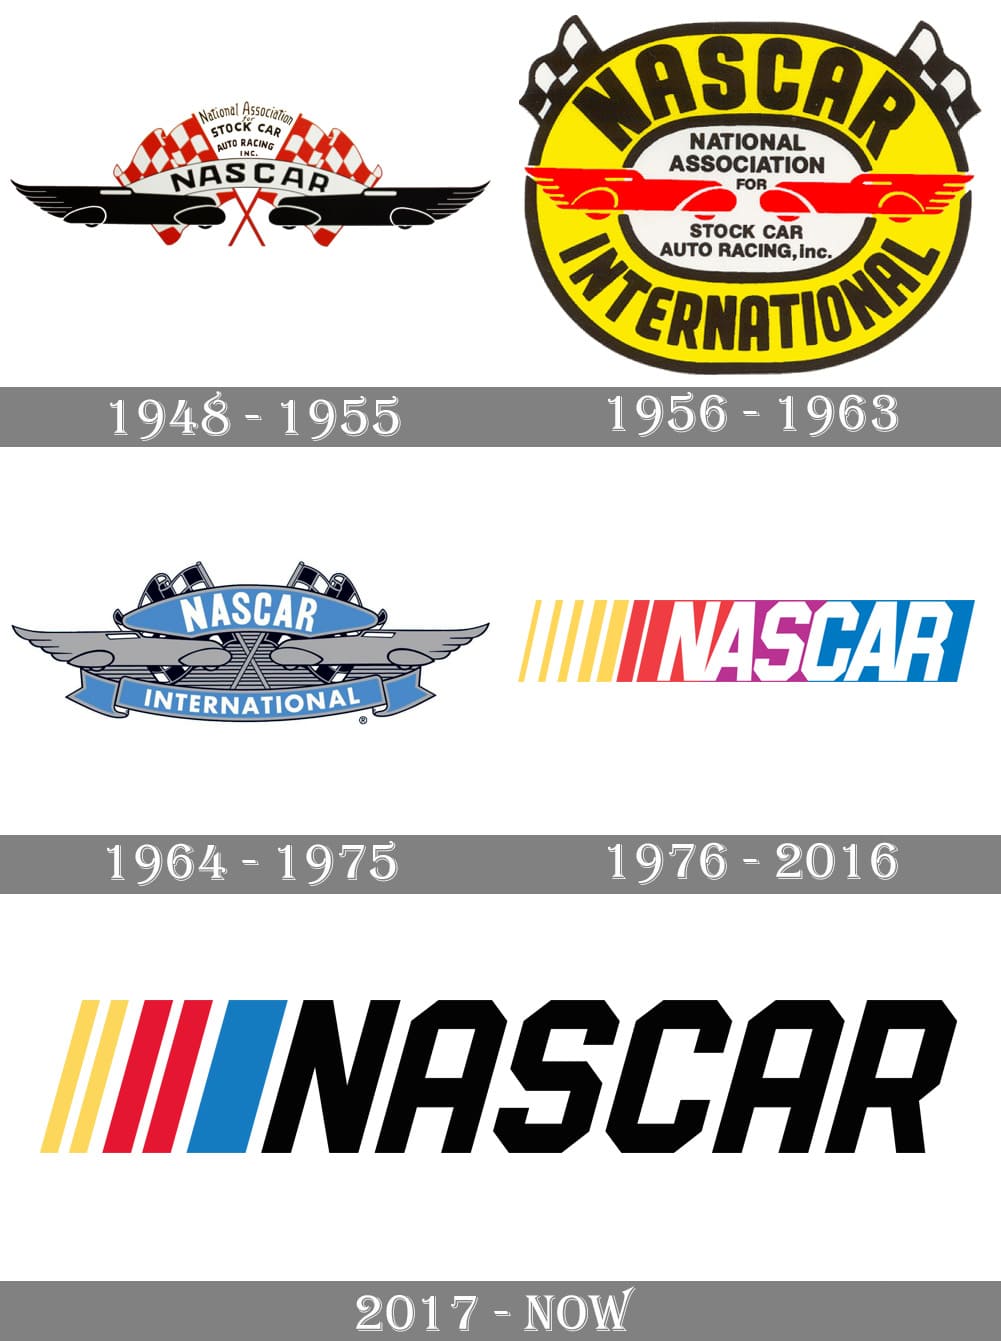 nascar race car logo - Kind Of Nice Blogsphere Picture Show